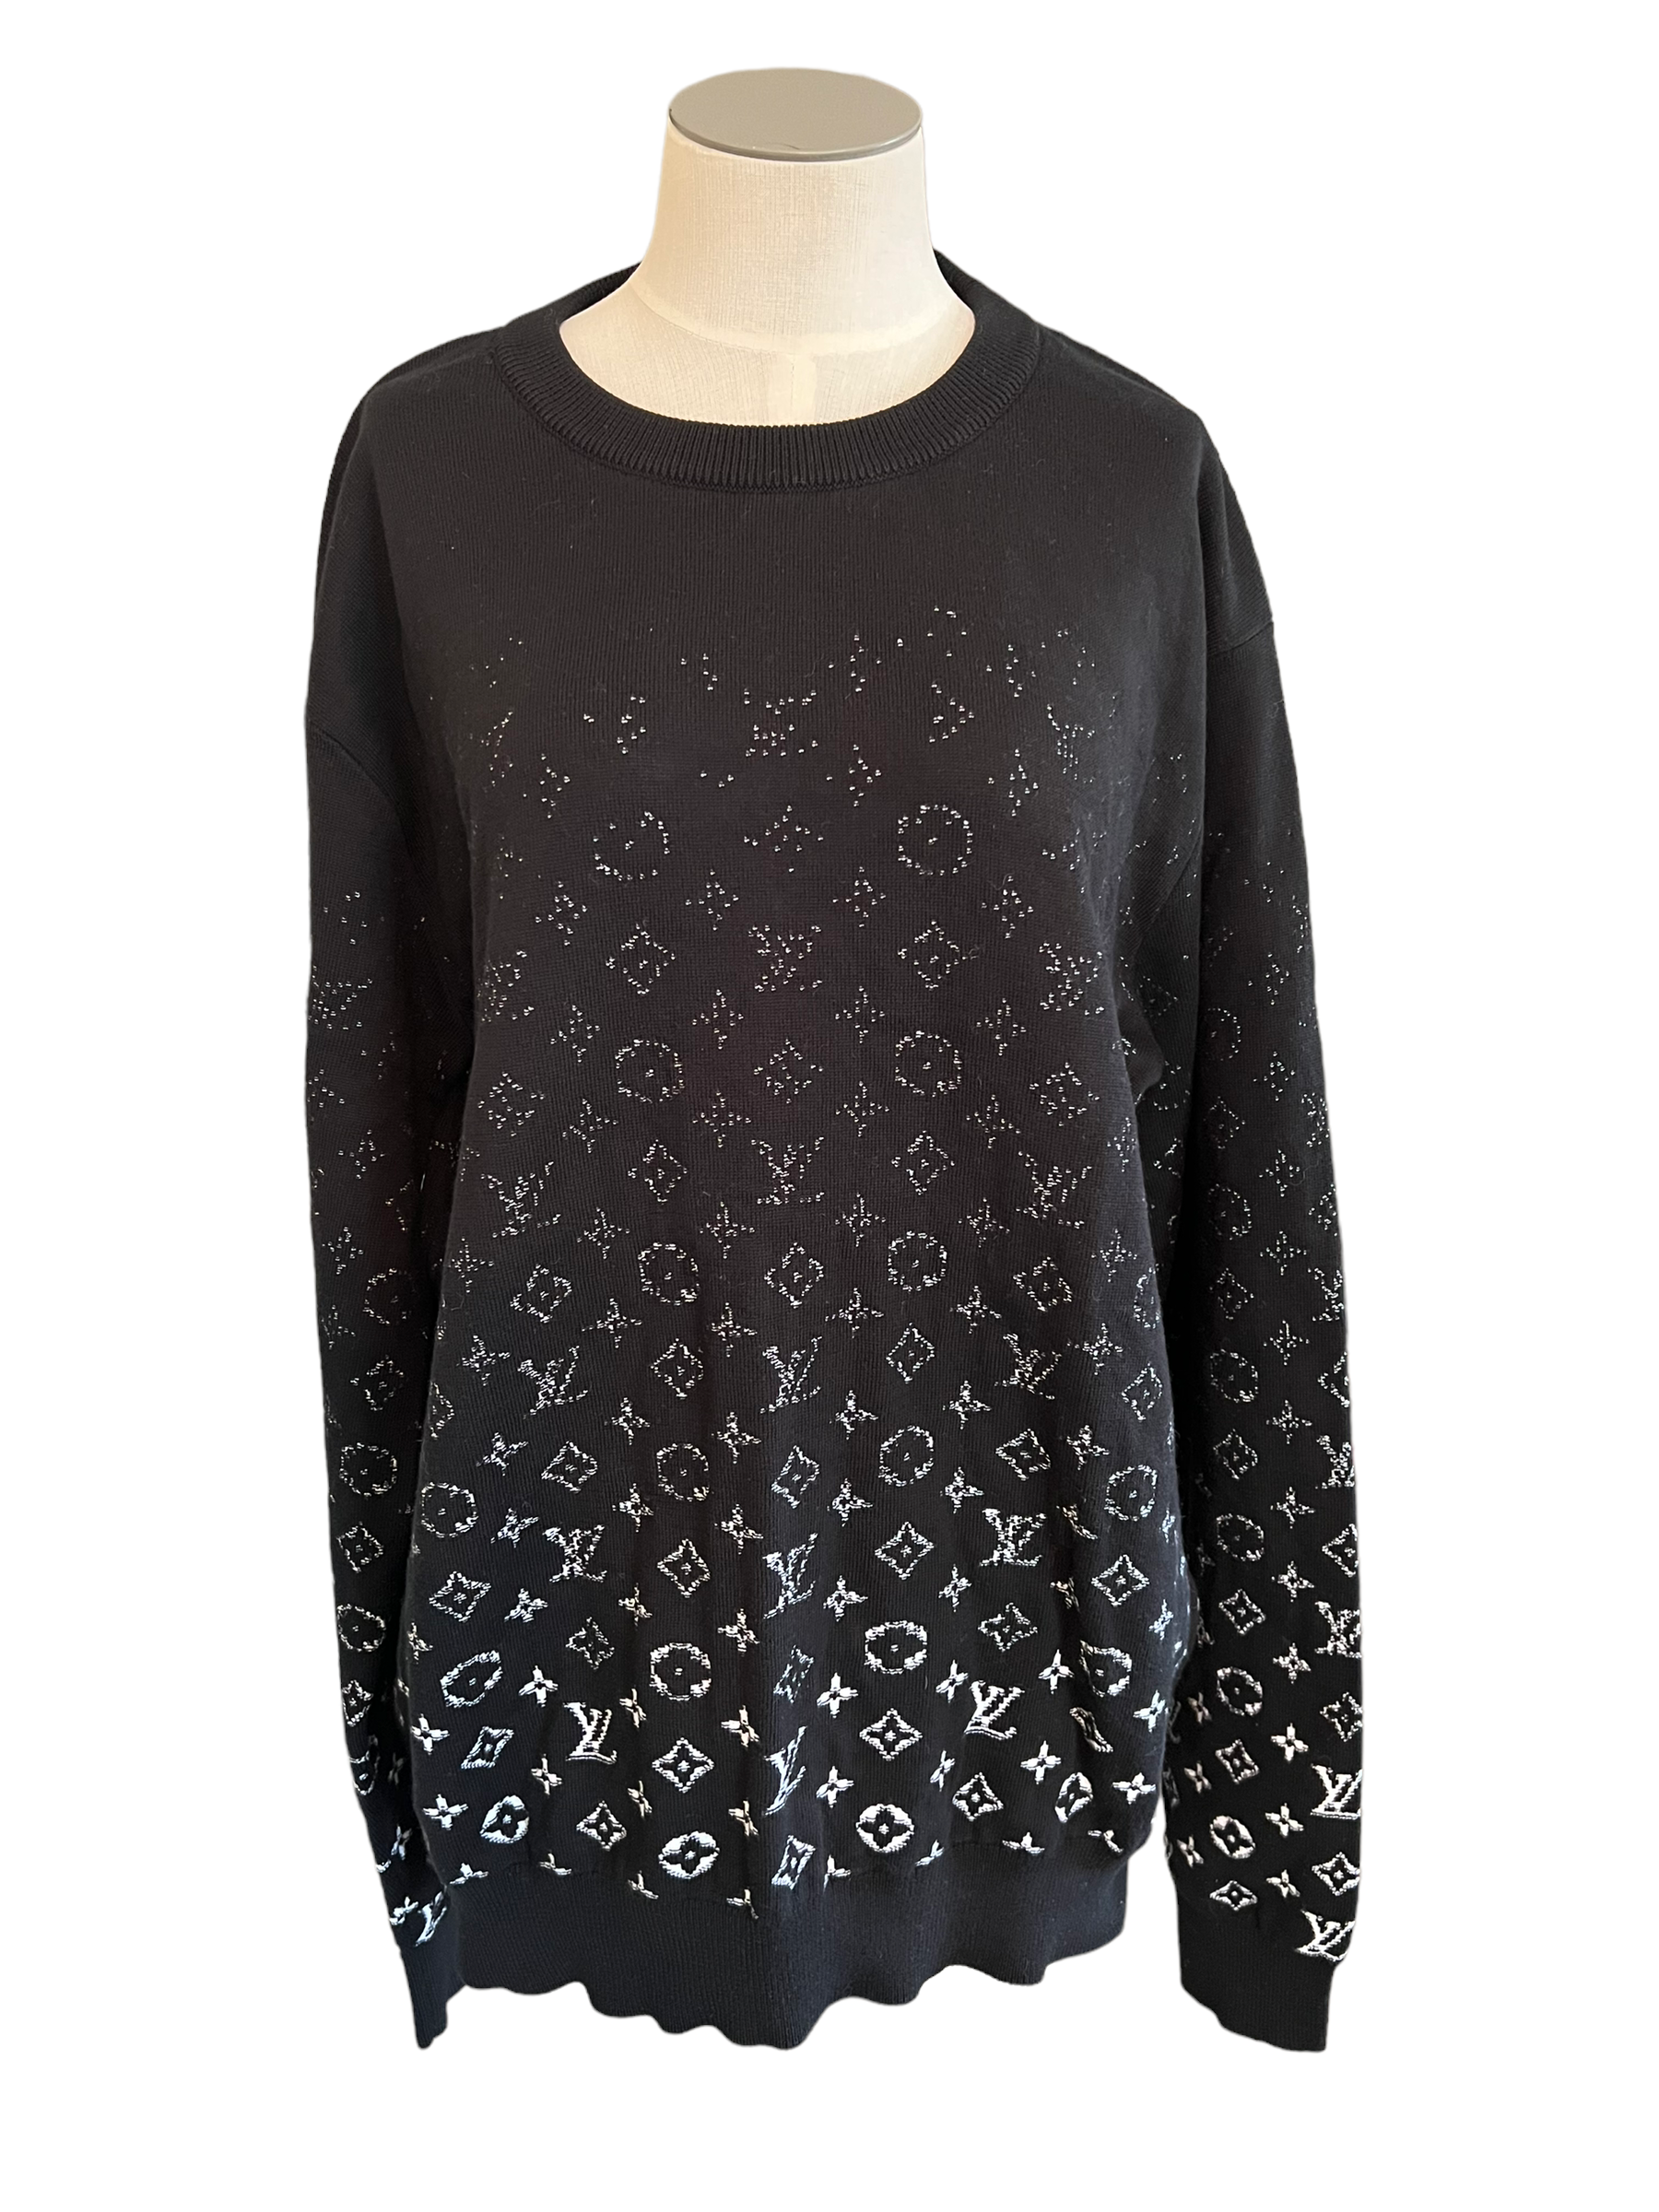 NWT Authentic Louis Vuitton Monogram Degrade Crew neck Sweater BLACK XL,  1A8A1R